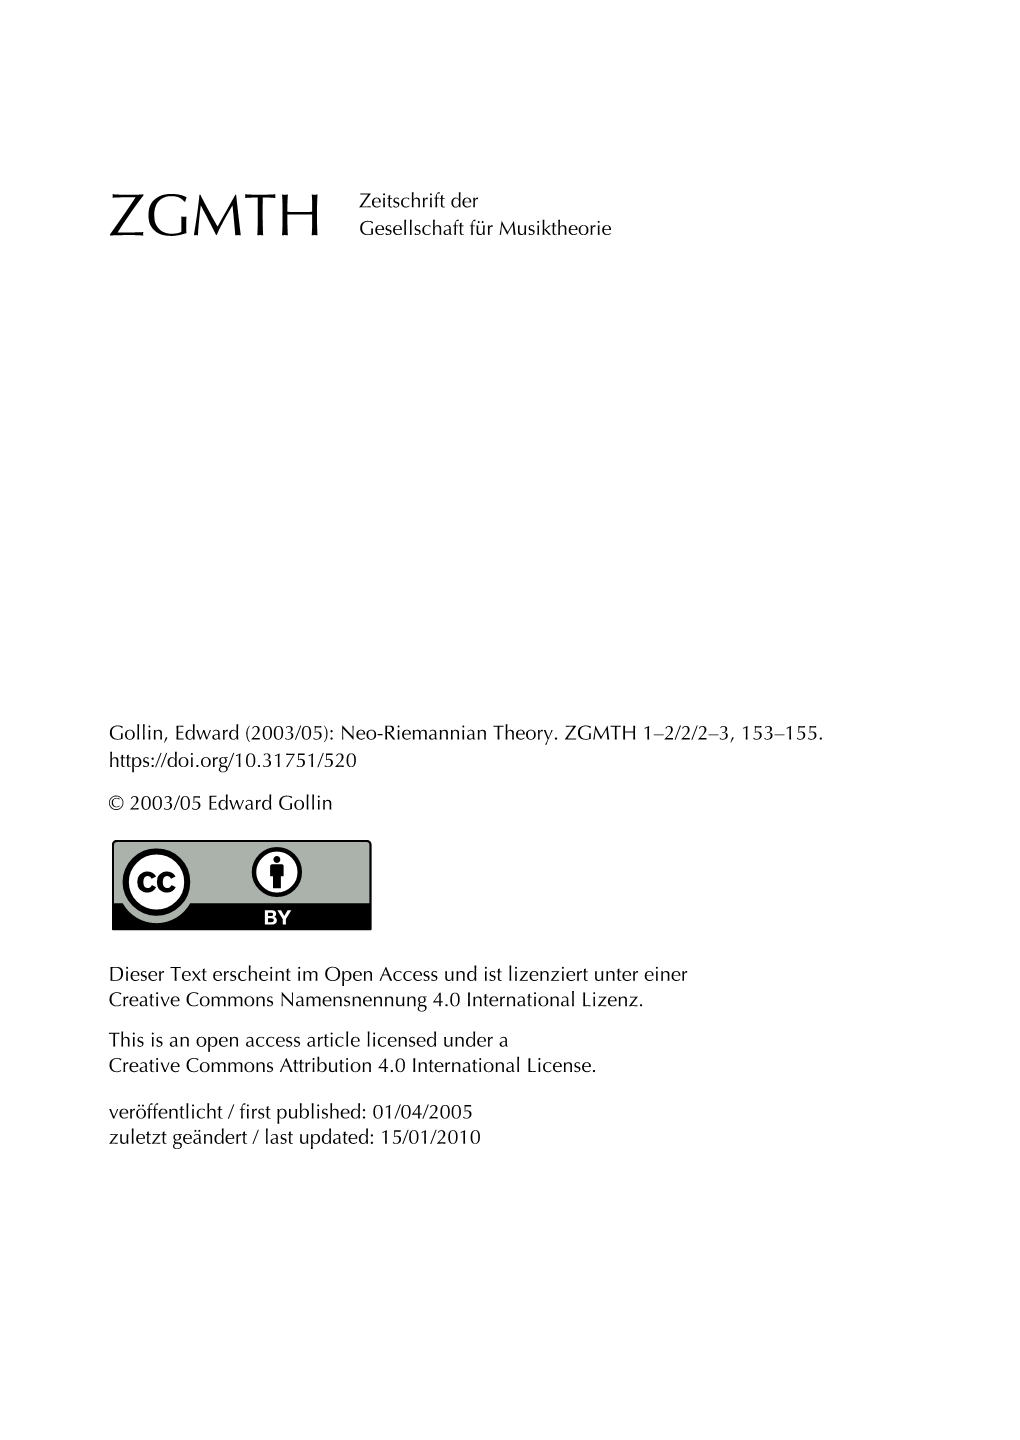 Gollin, Edward (2003/05): Neo-Riemannian Theory. ZGMTH 1–2/2/2–3, 153–155. © 2003/05 Edward